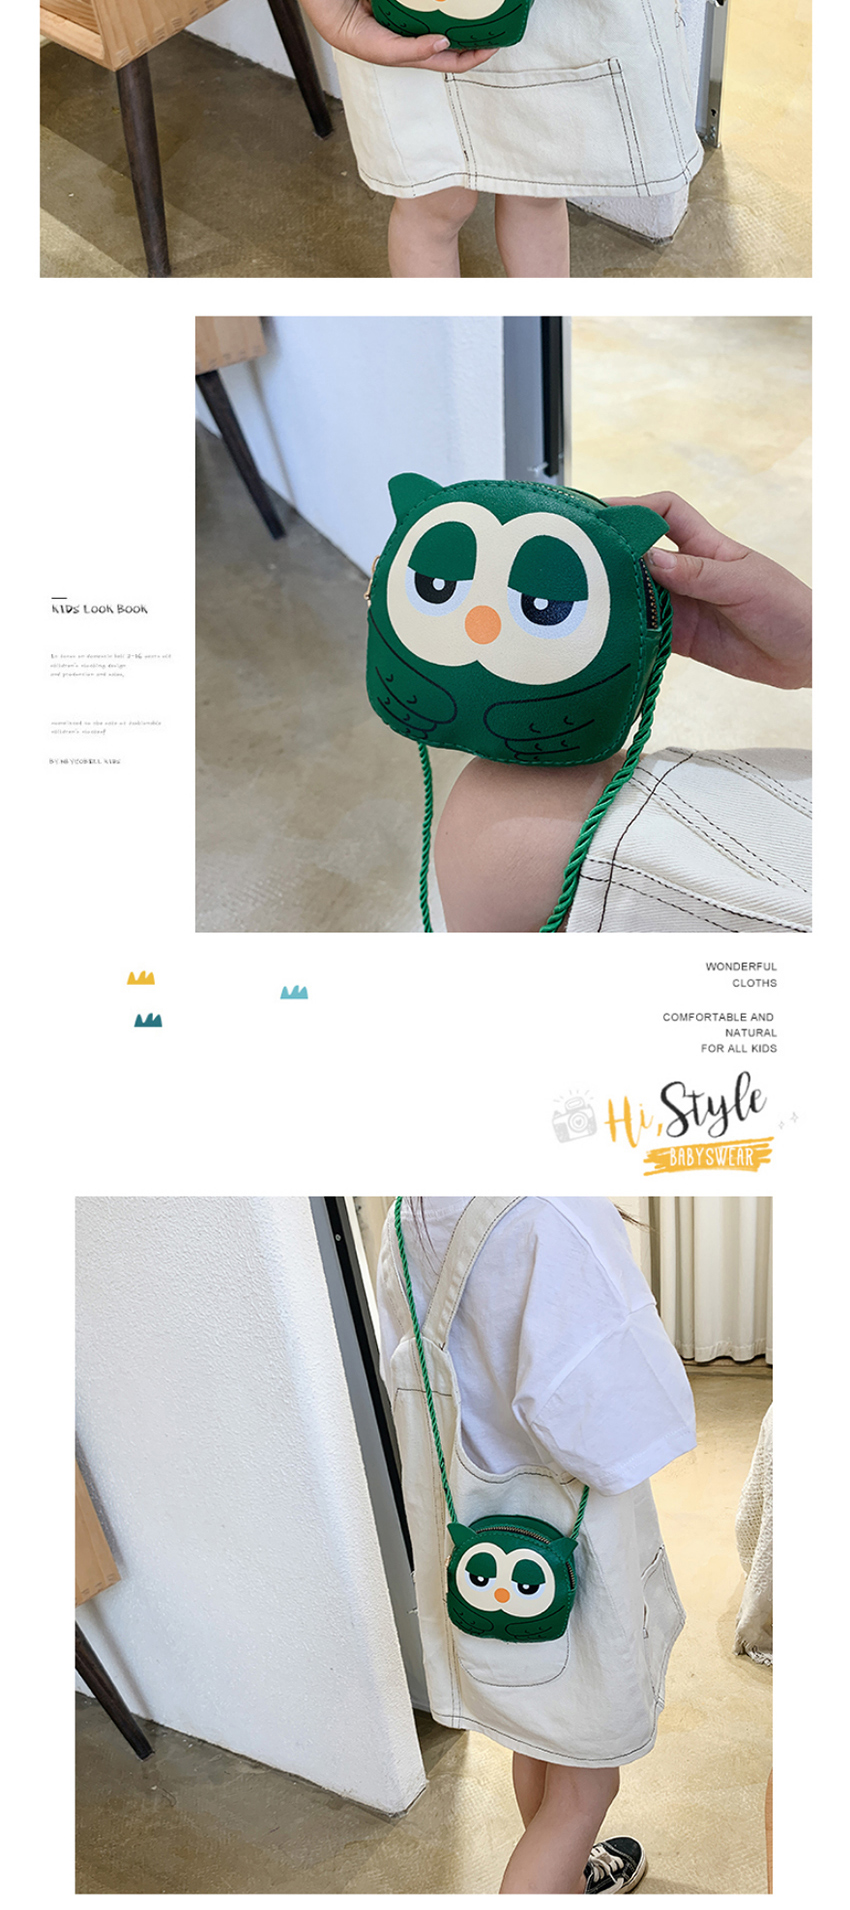 Fashion Wangzai Twisted Rope Shoulder Strap Small Animal Childrens Shoulder Messenger Bag,Shoulder bags